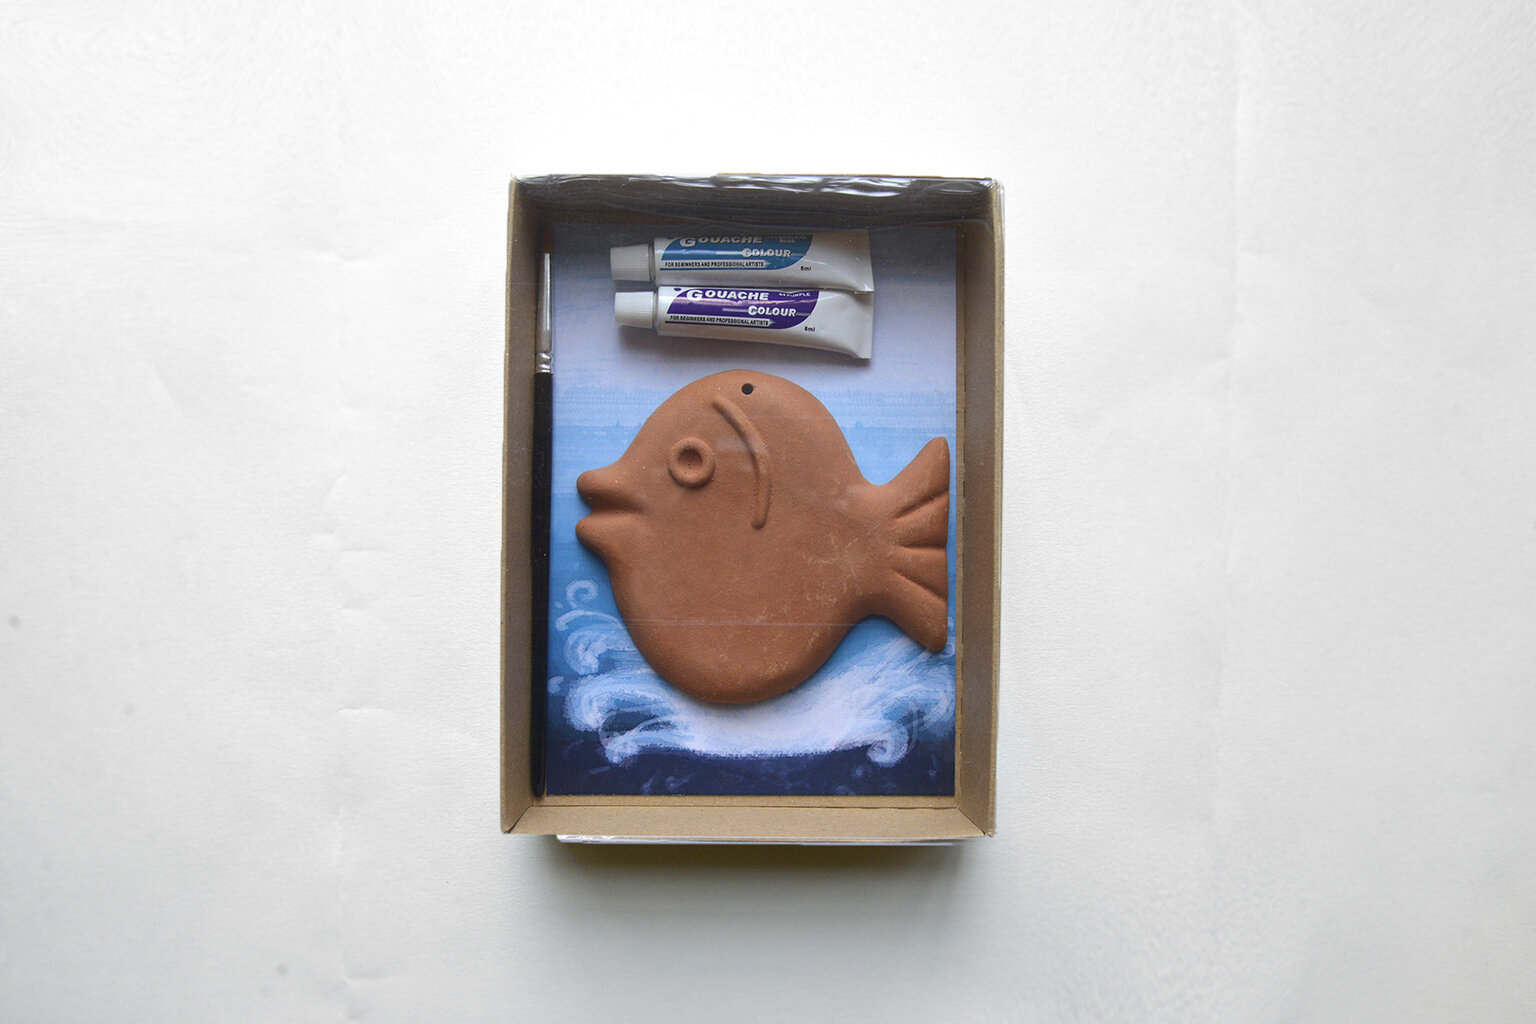 "Painting the fish" kit